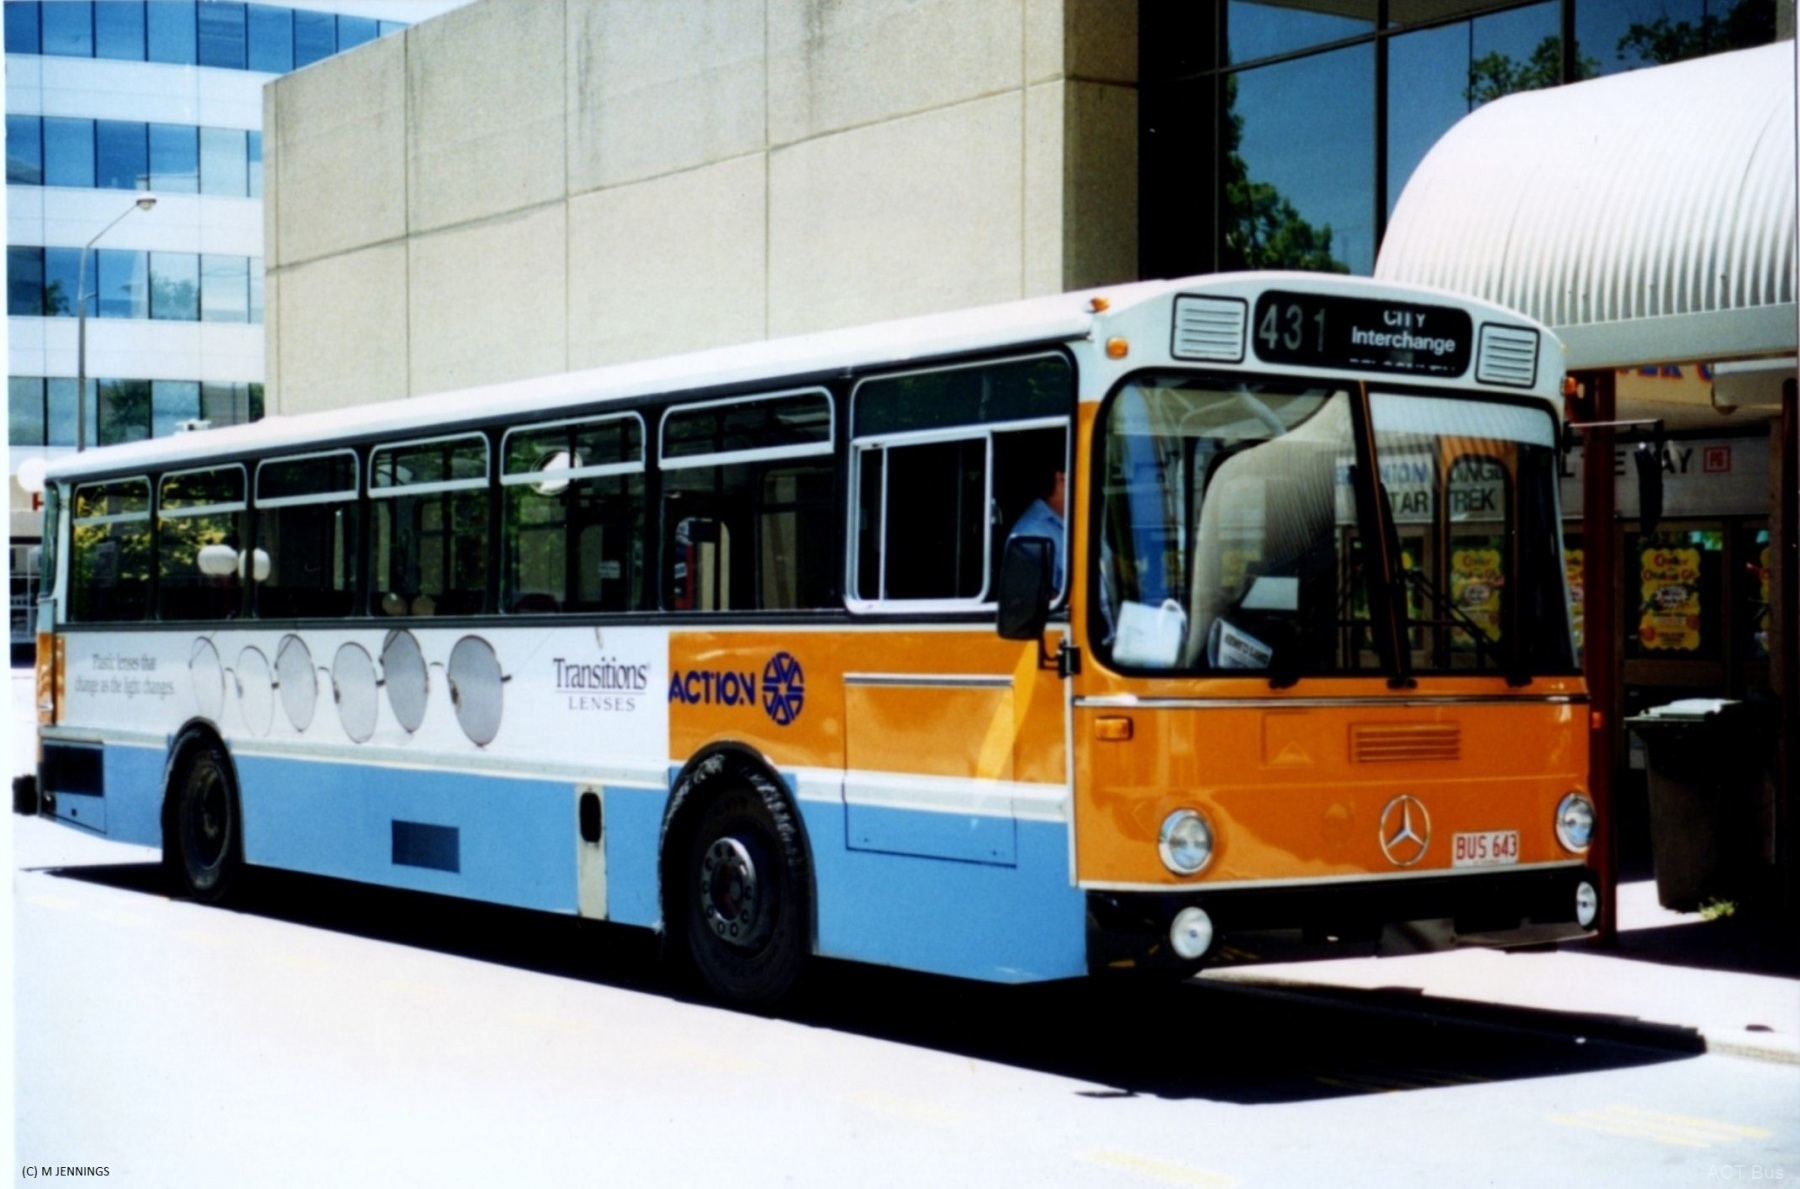 Bus-643-City-Interchange